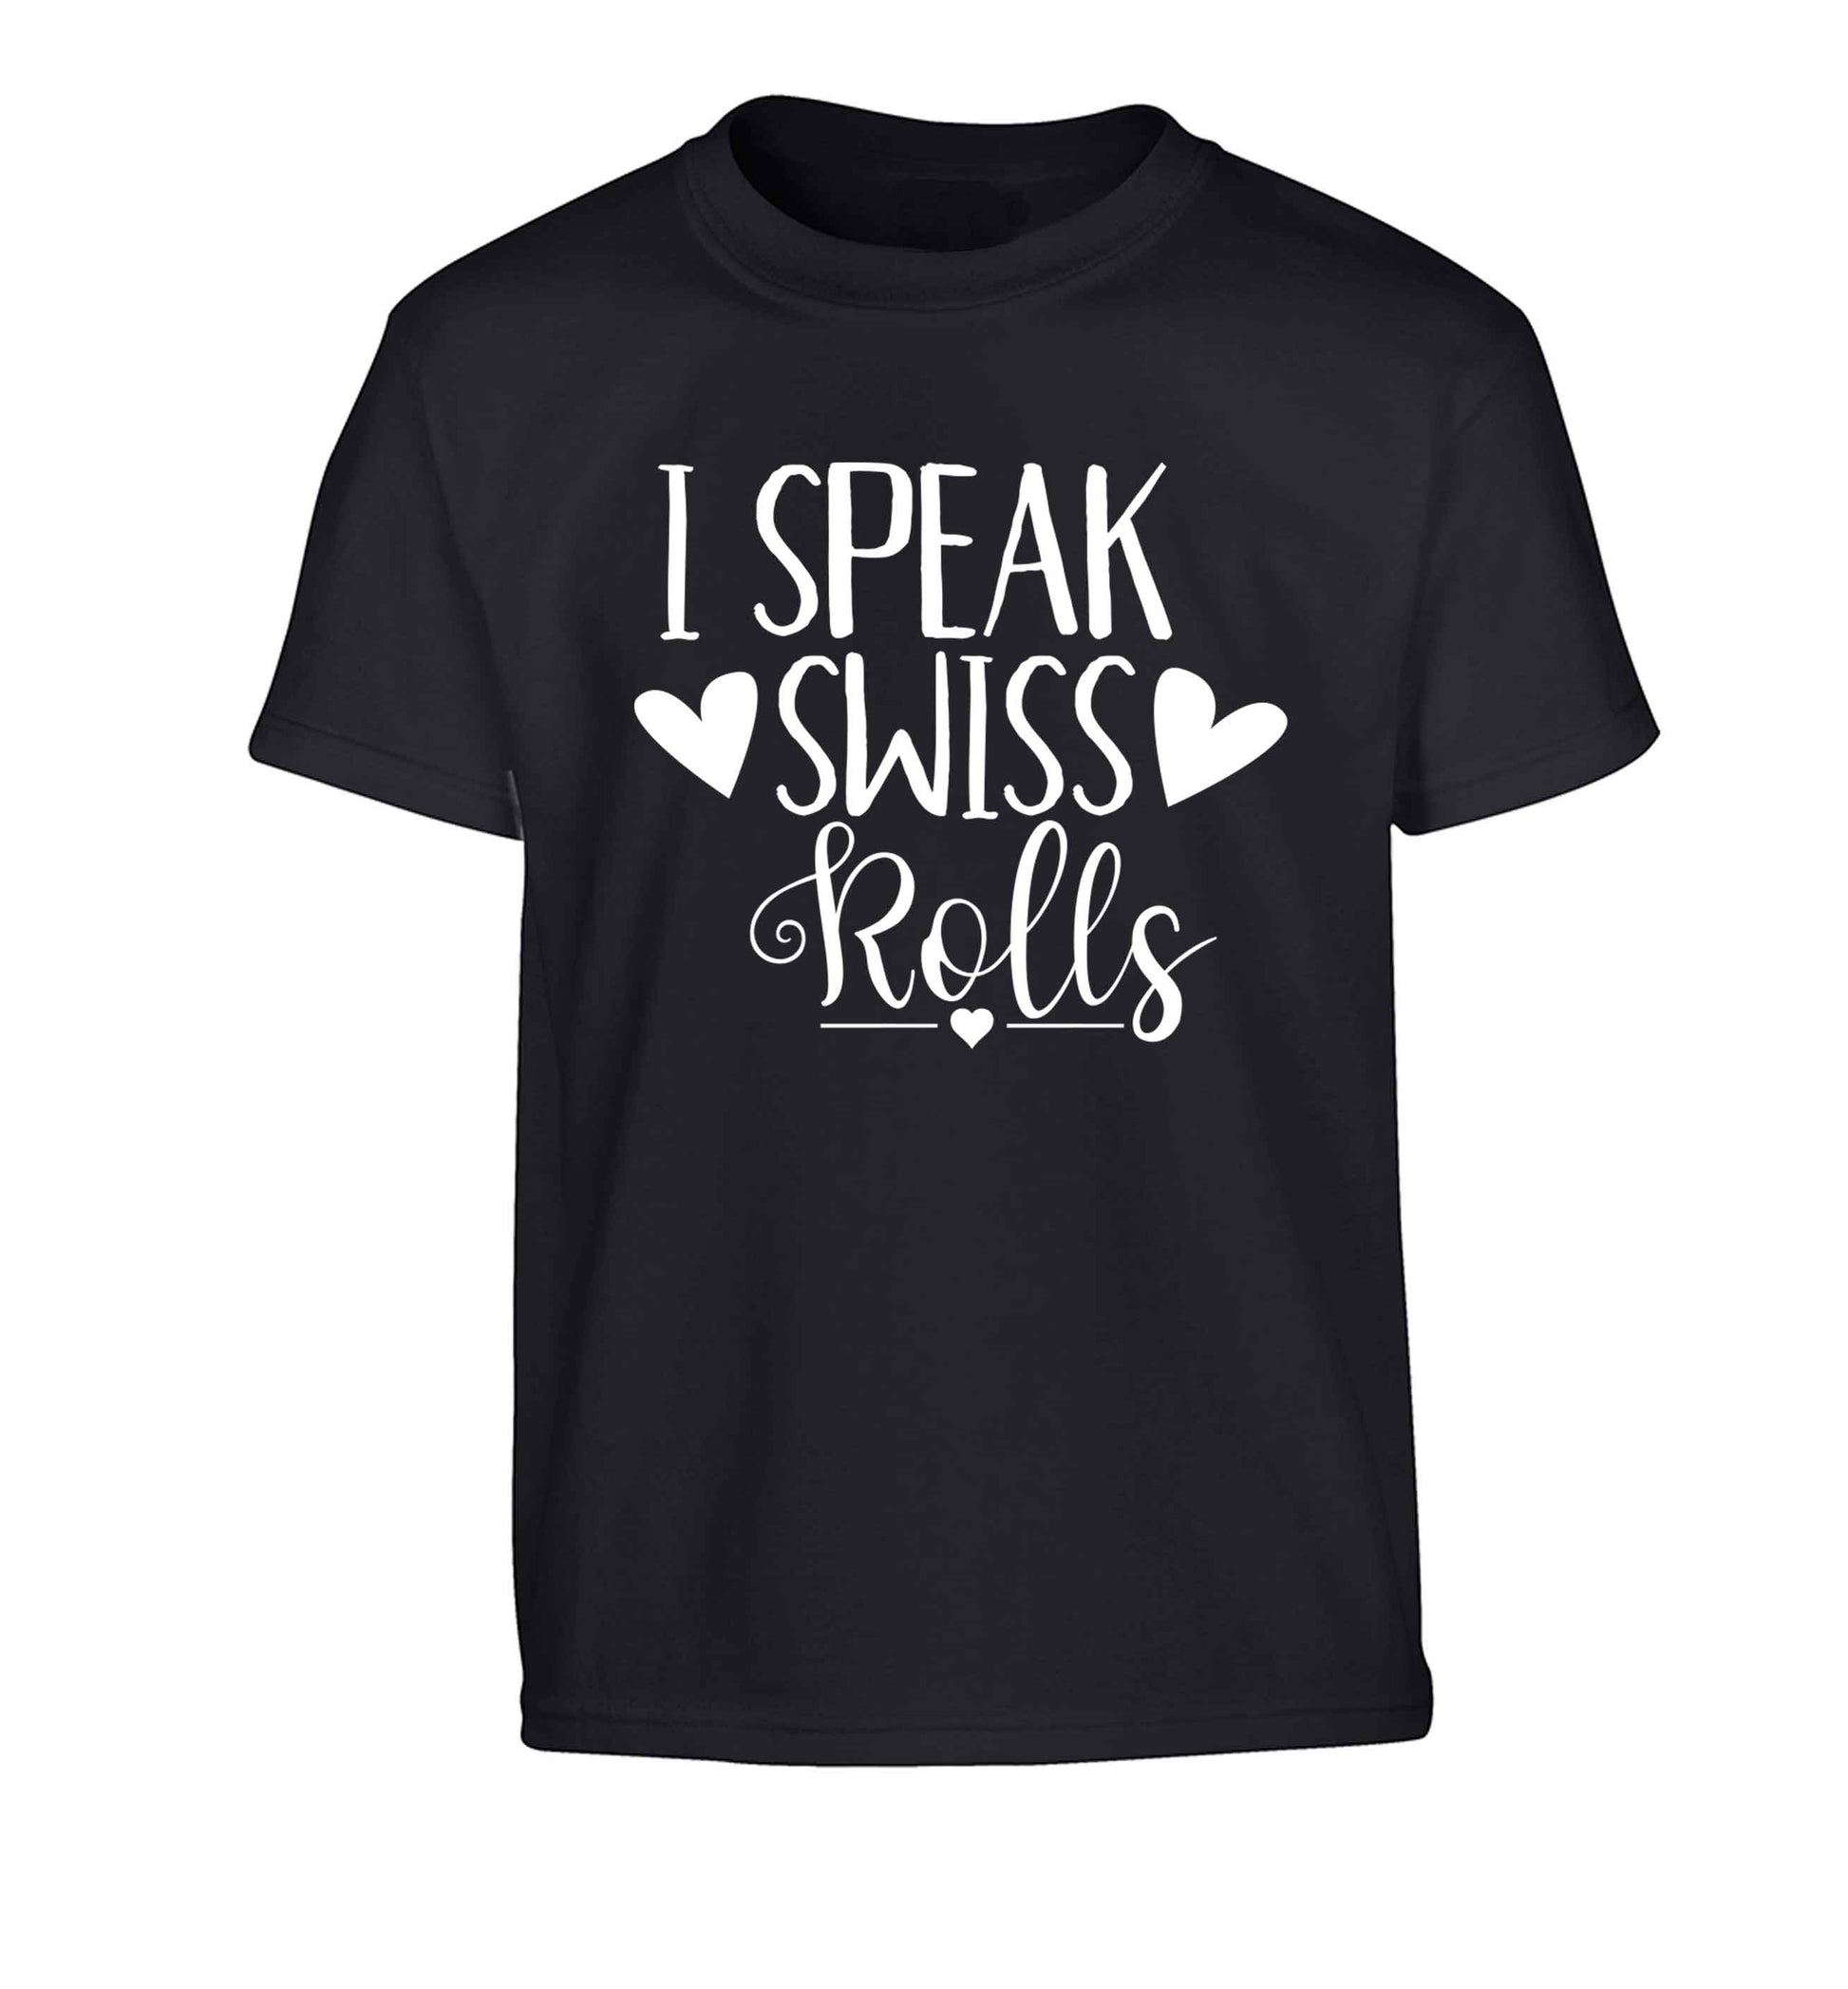 I speak swiss..rolls Children's black Tshirt 12-13 Years